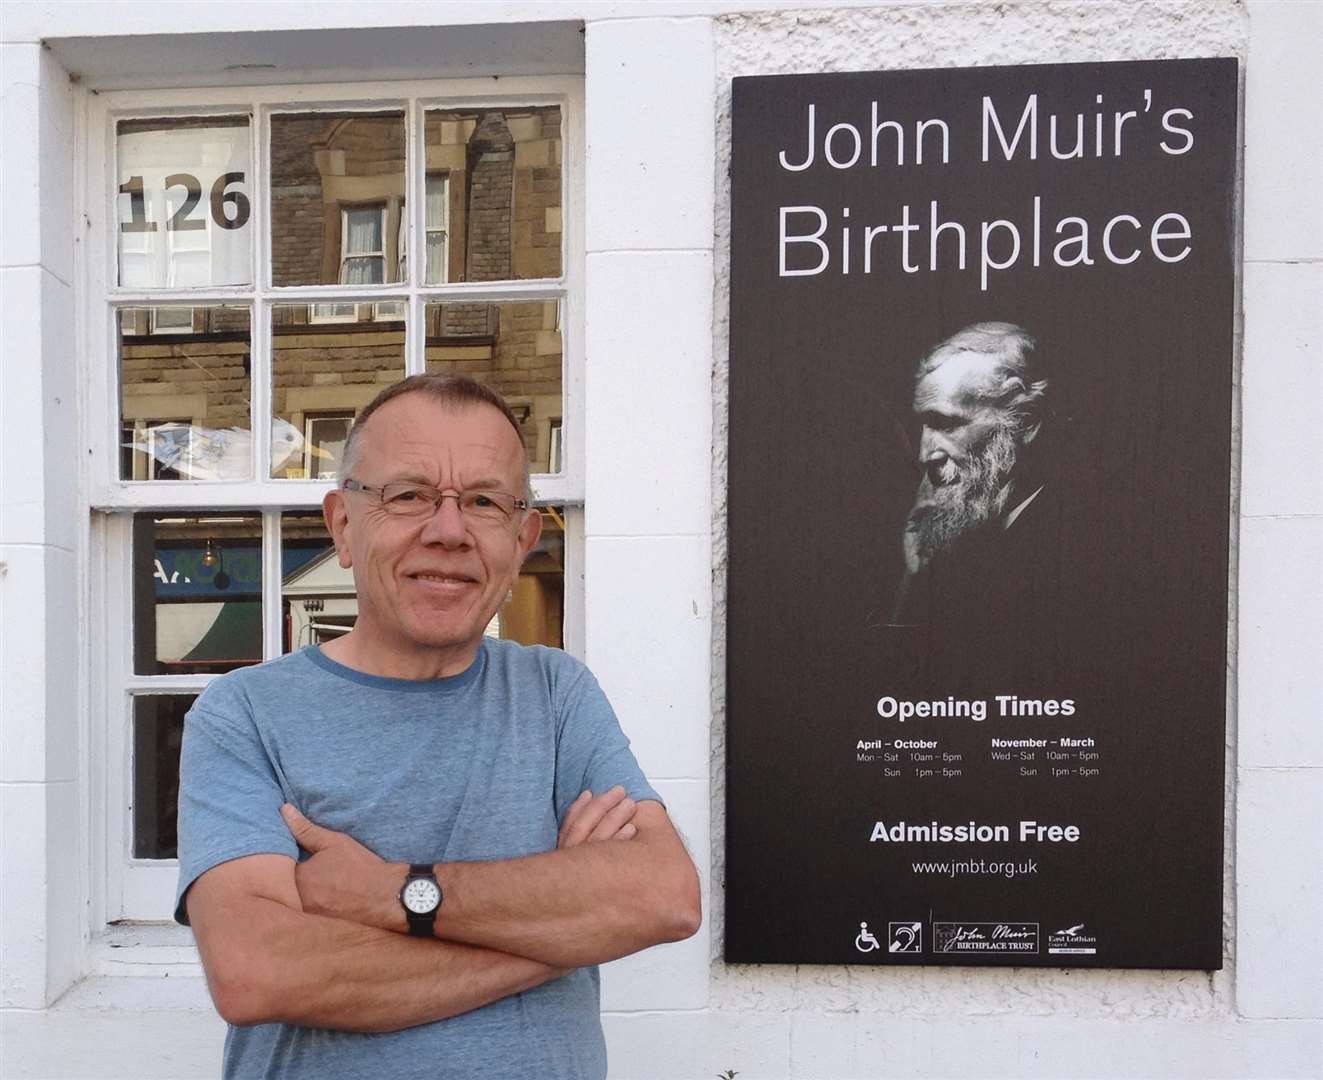 David Gibson has taken over as chairman of the John Muir Trust.